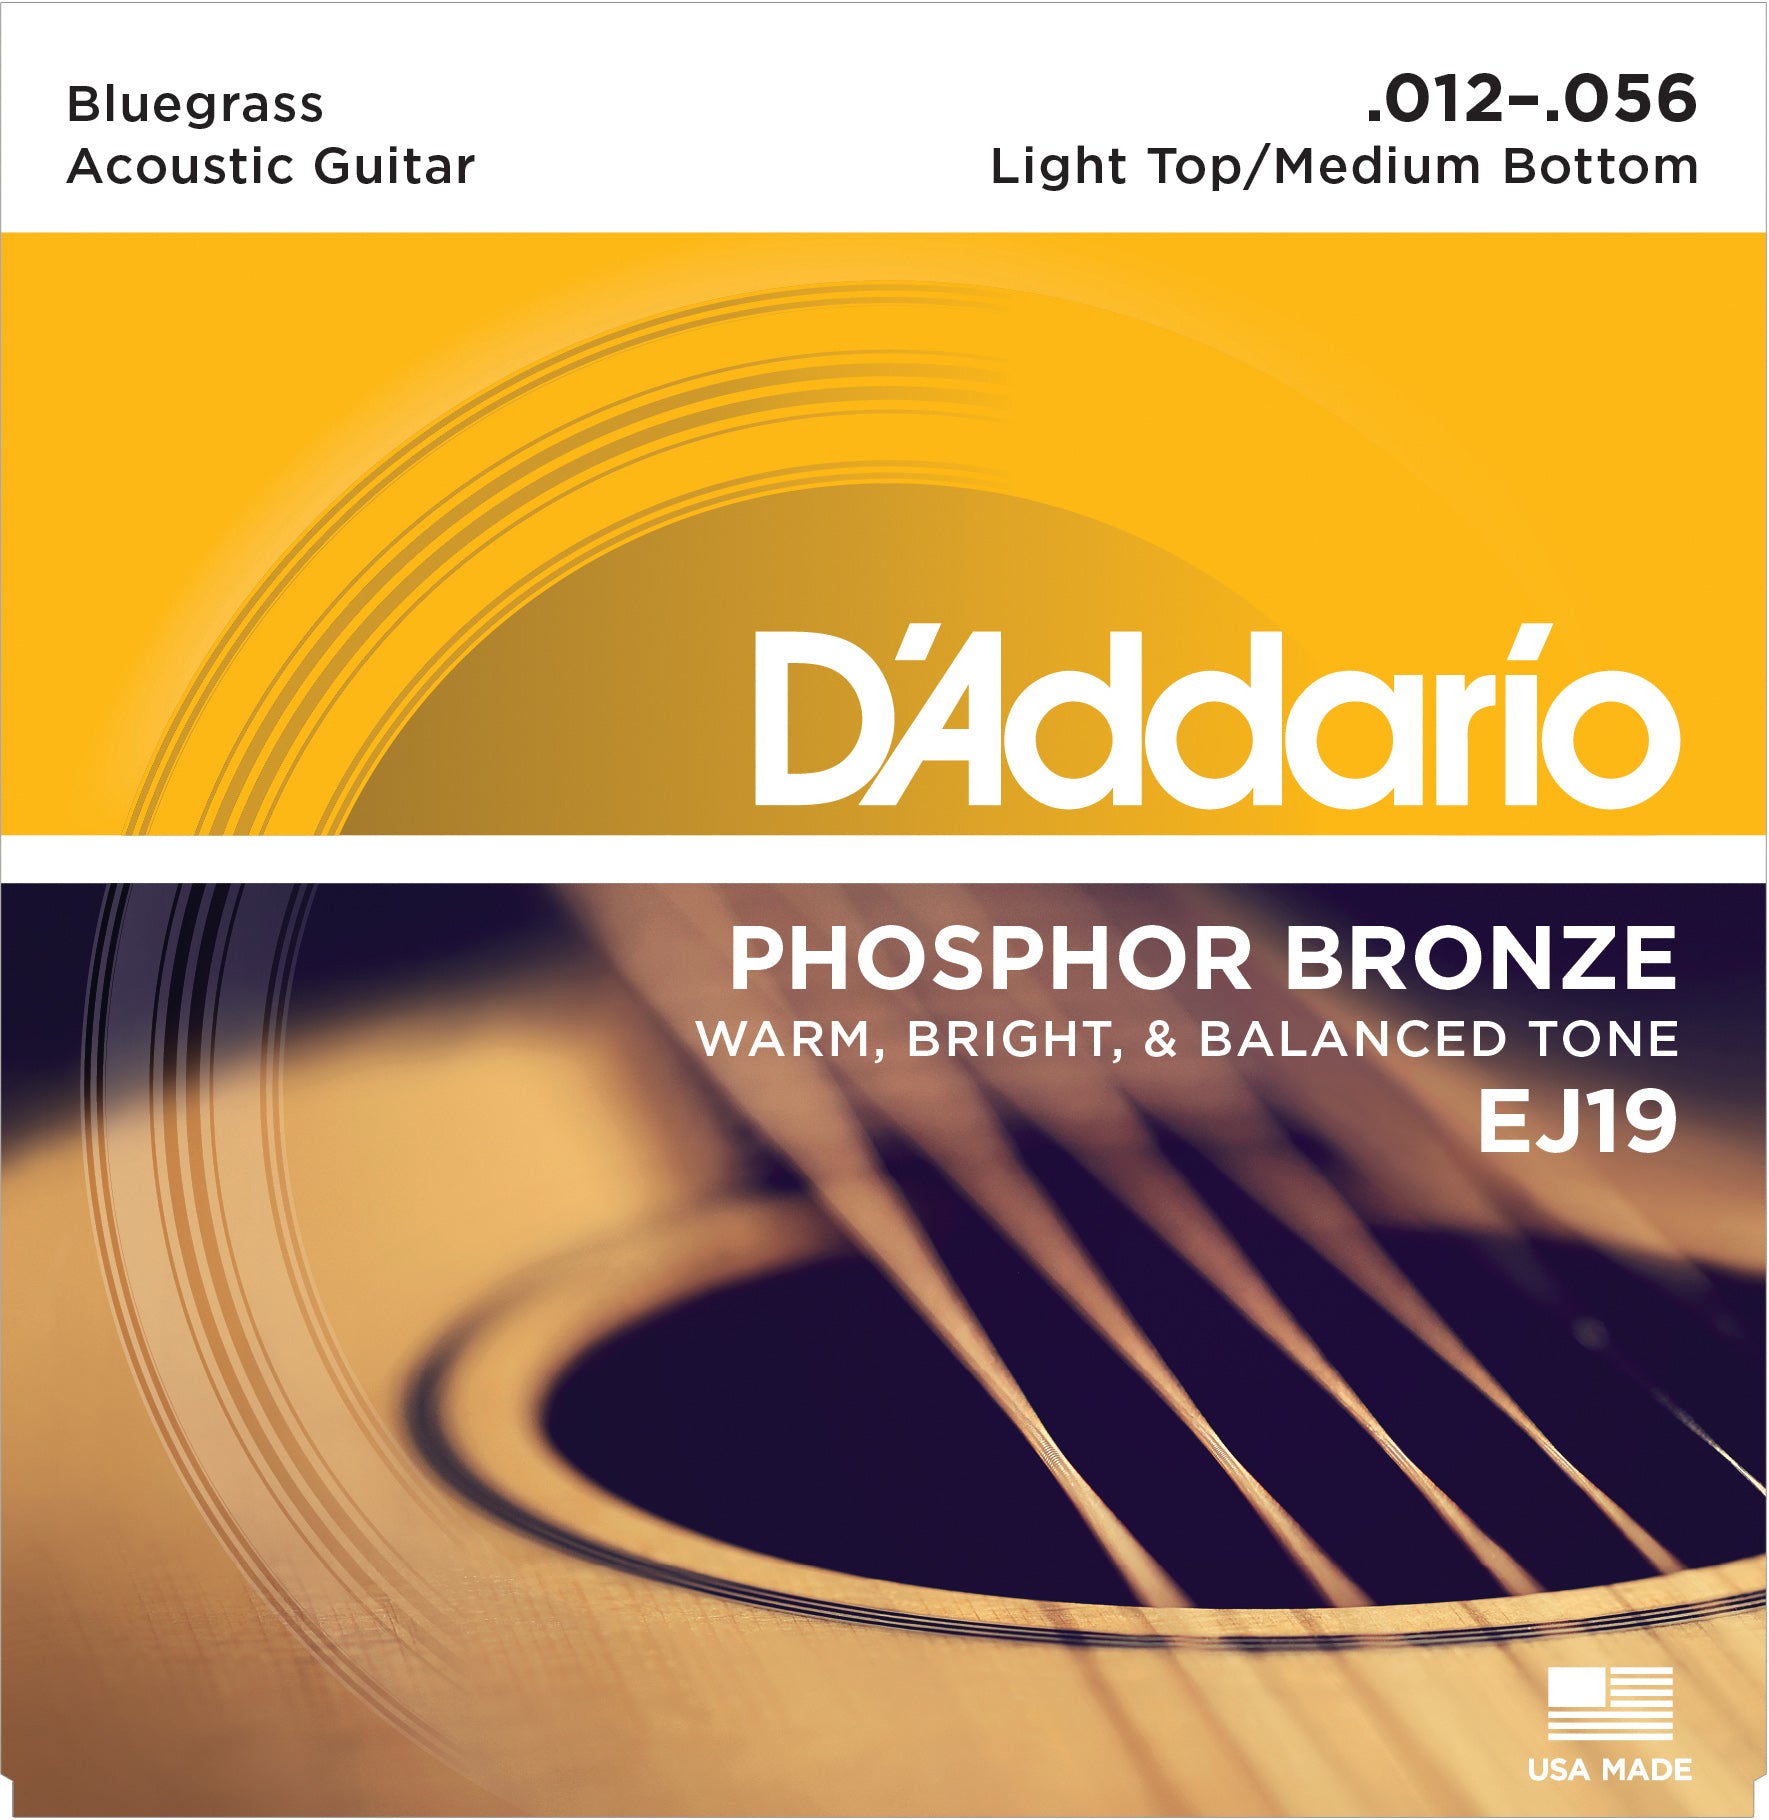 D'ADDARIO PHOSPHOR BRONZE ACOUSTIC GUITAR STRINGS BLUEGRASS .012-.056